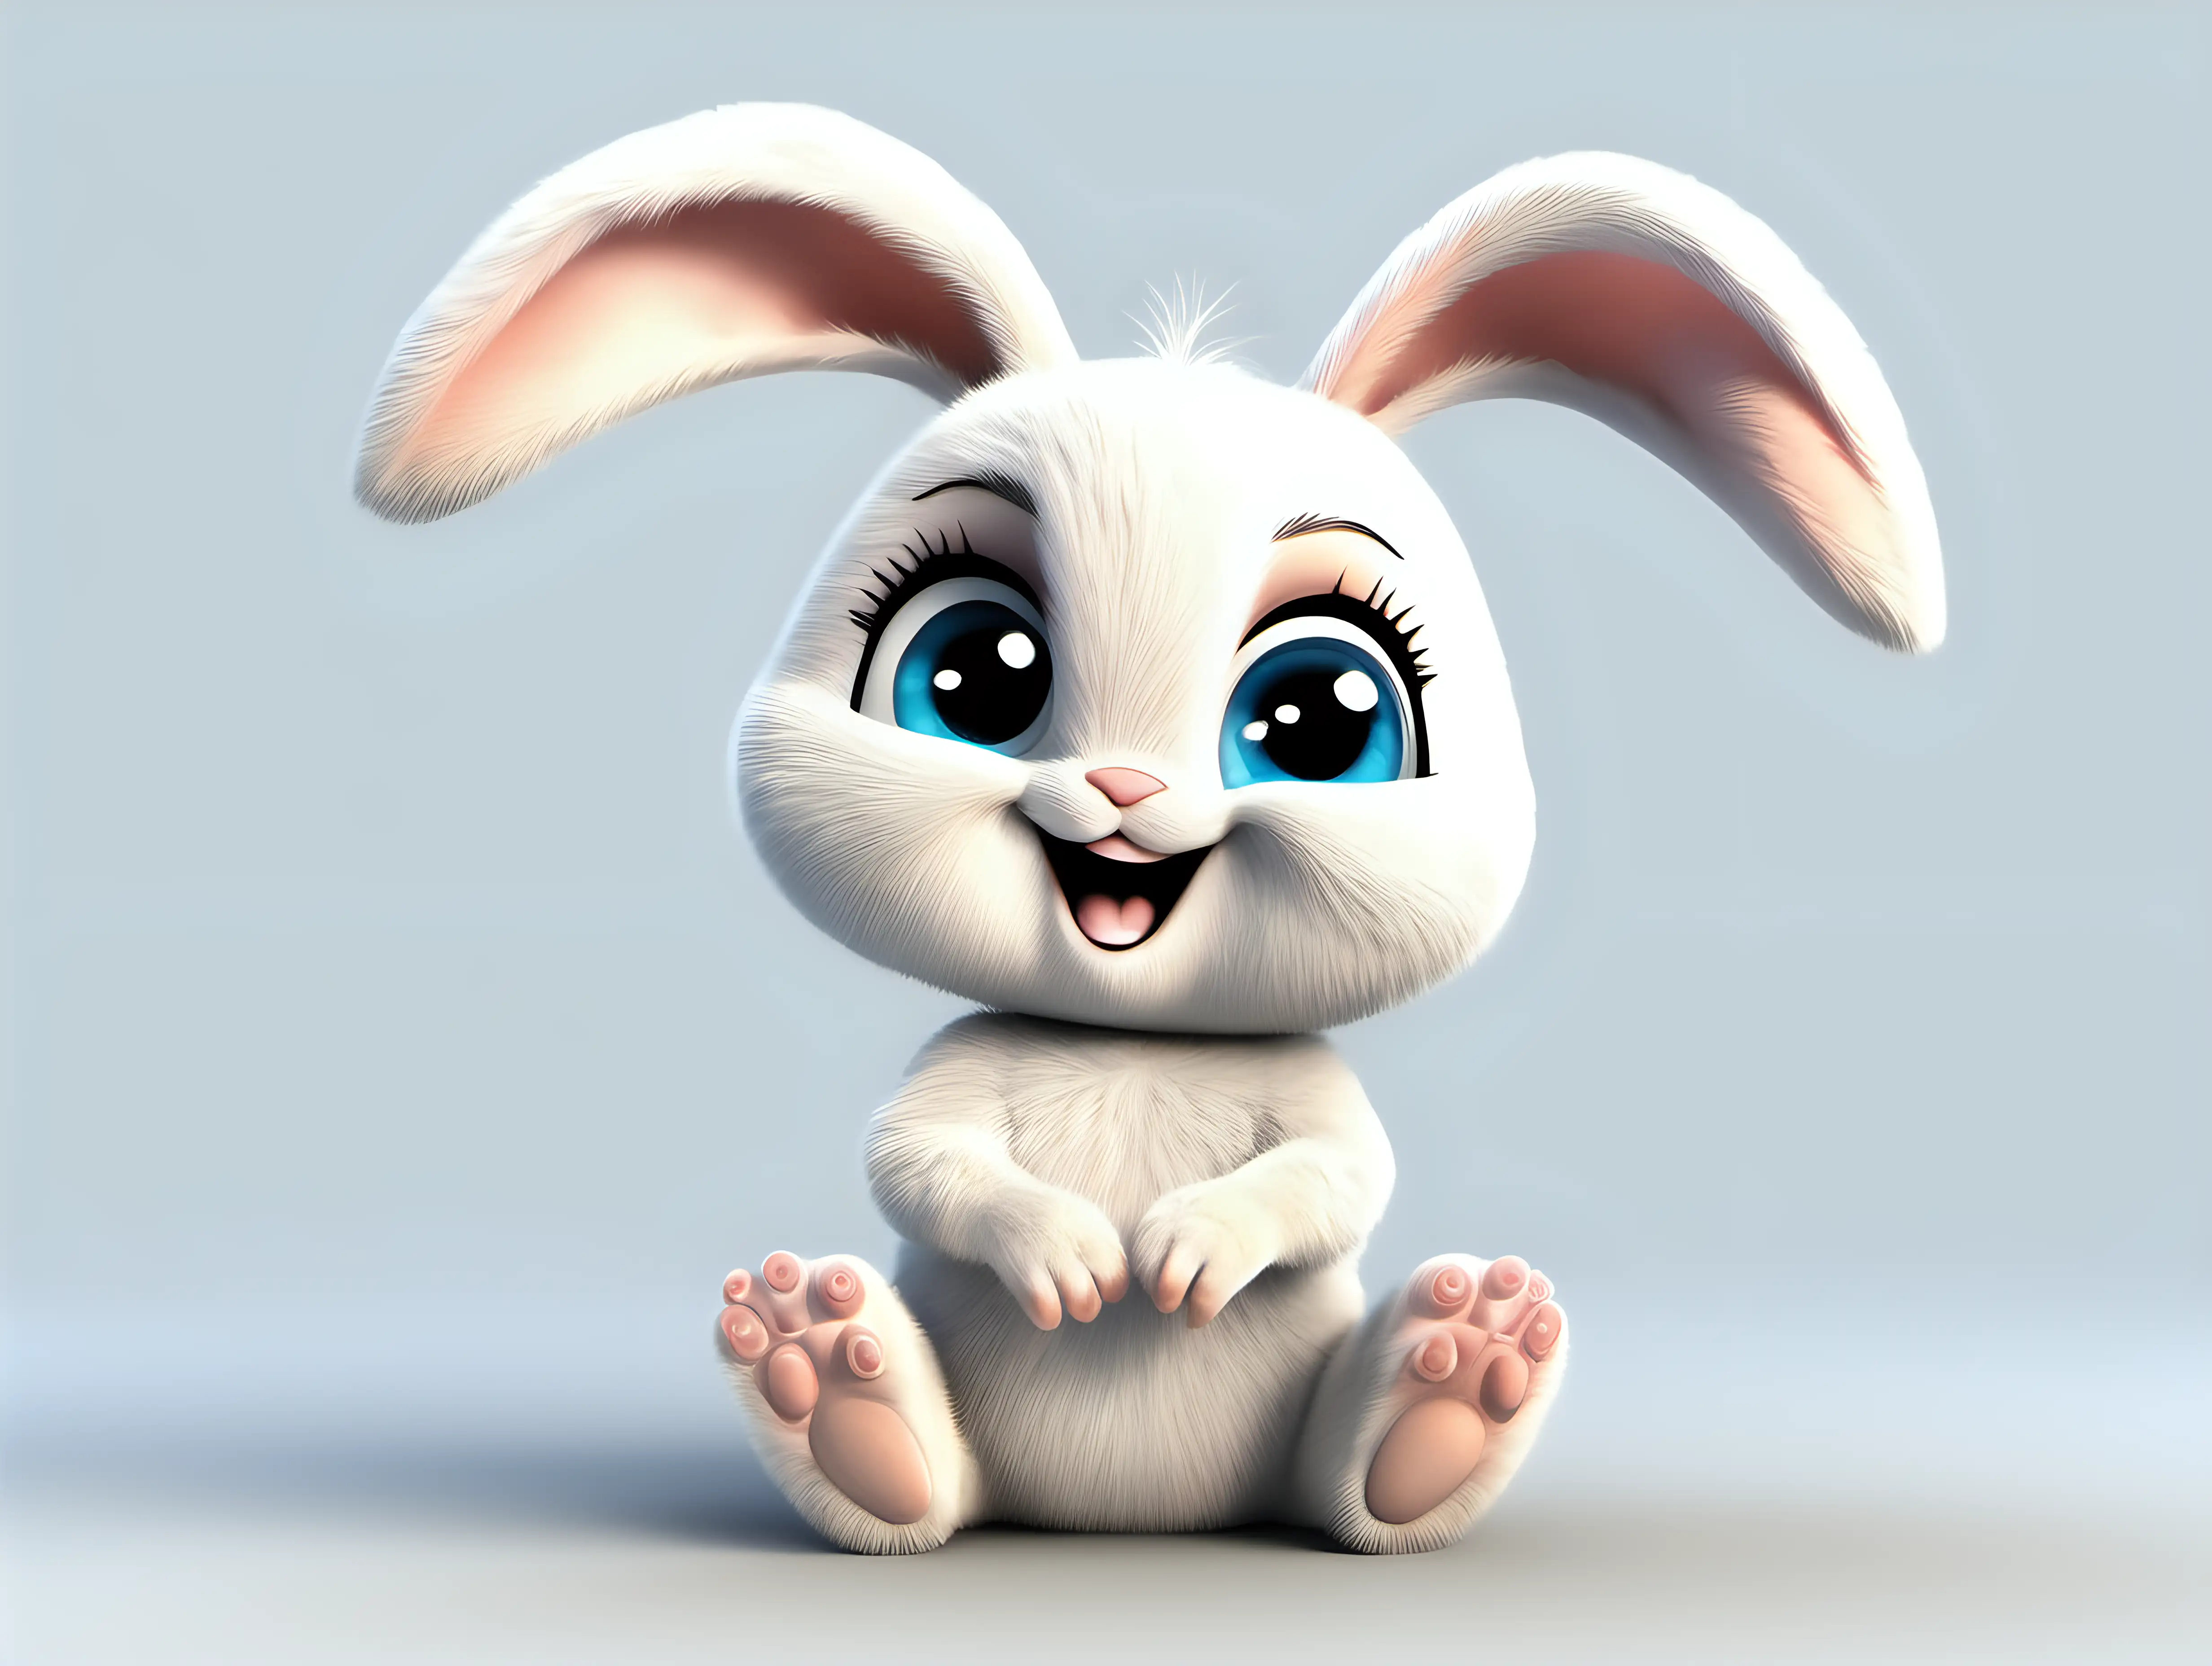 Animated cartoon baby rabbit friendly full body on white background